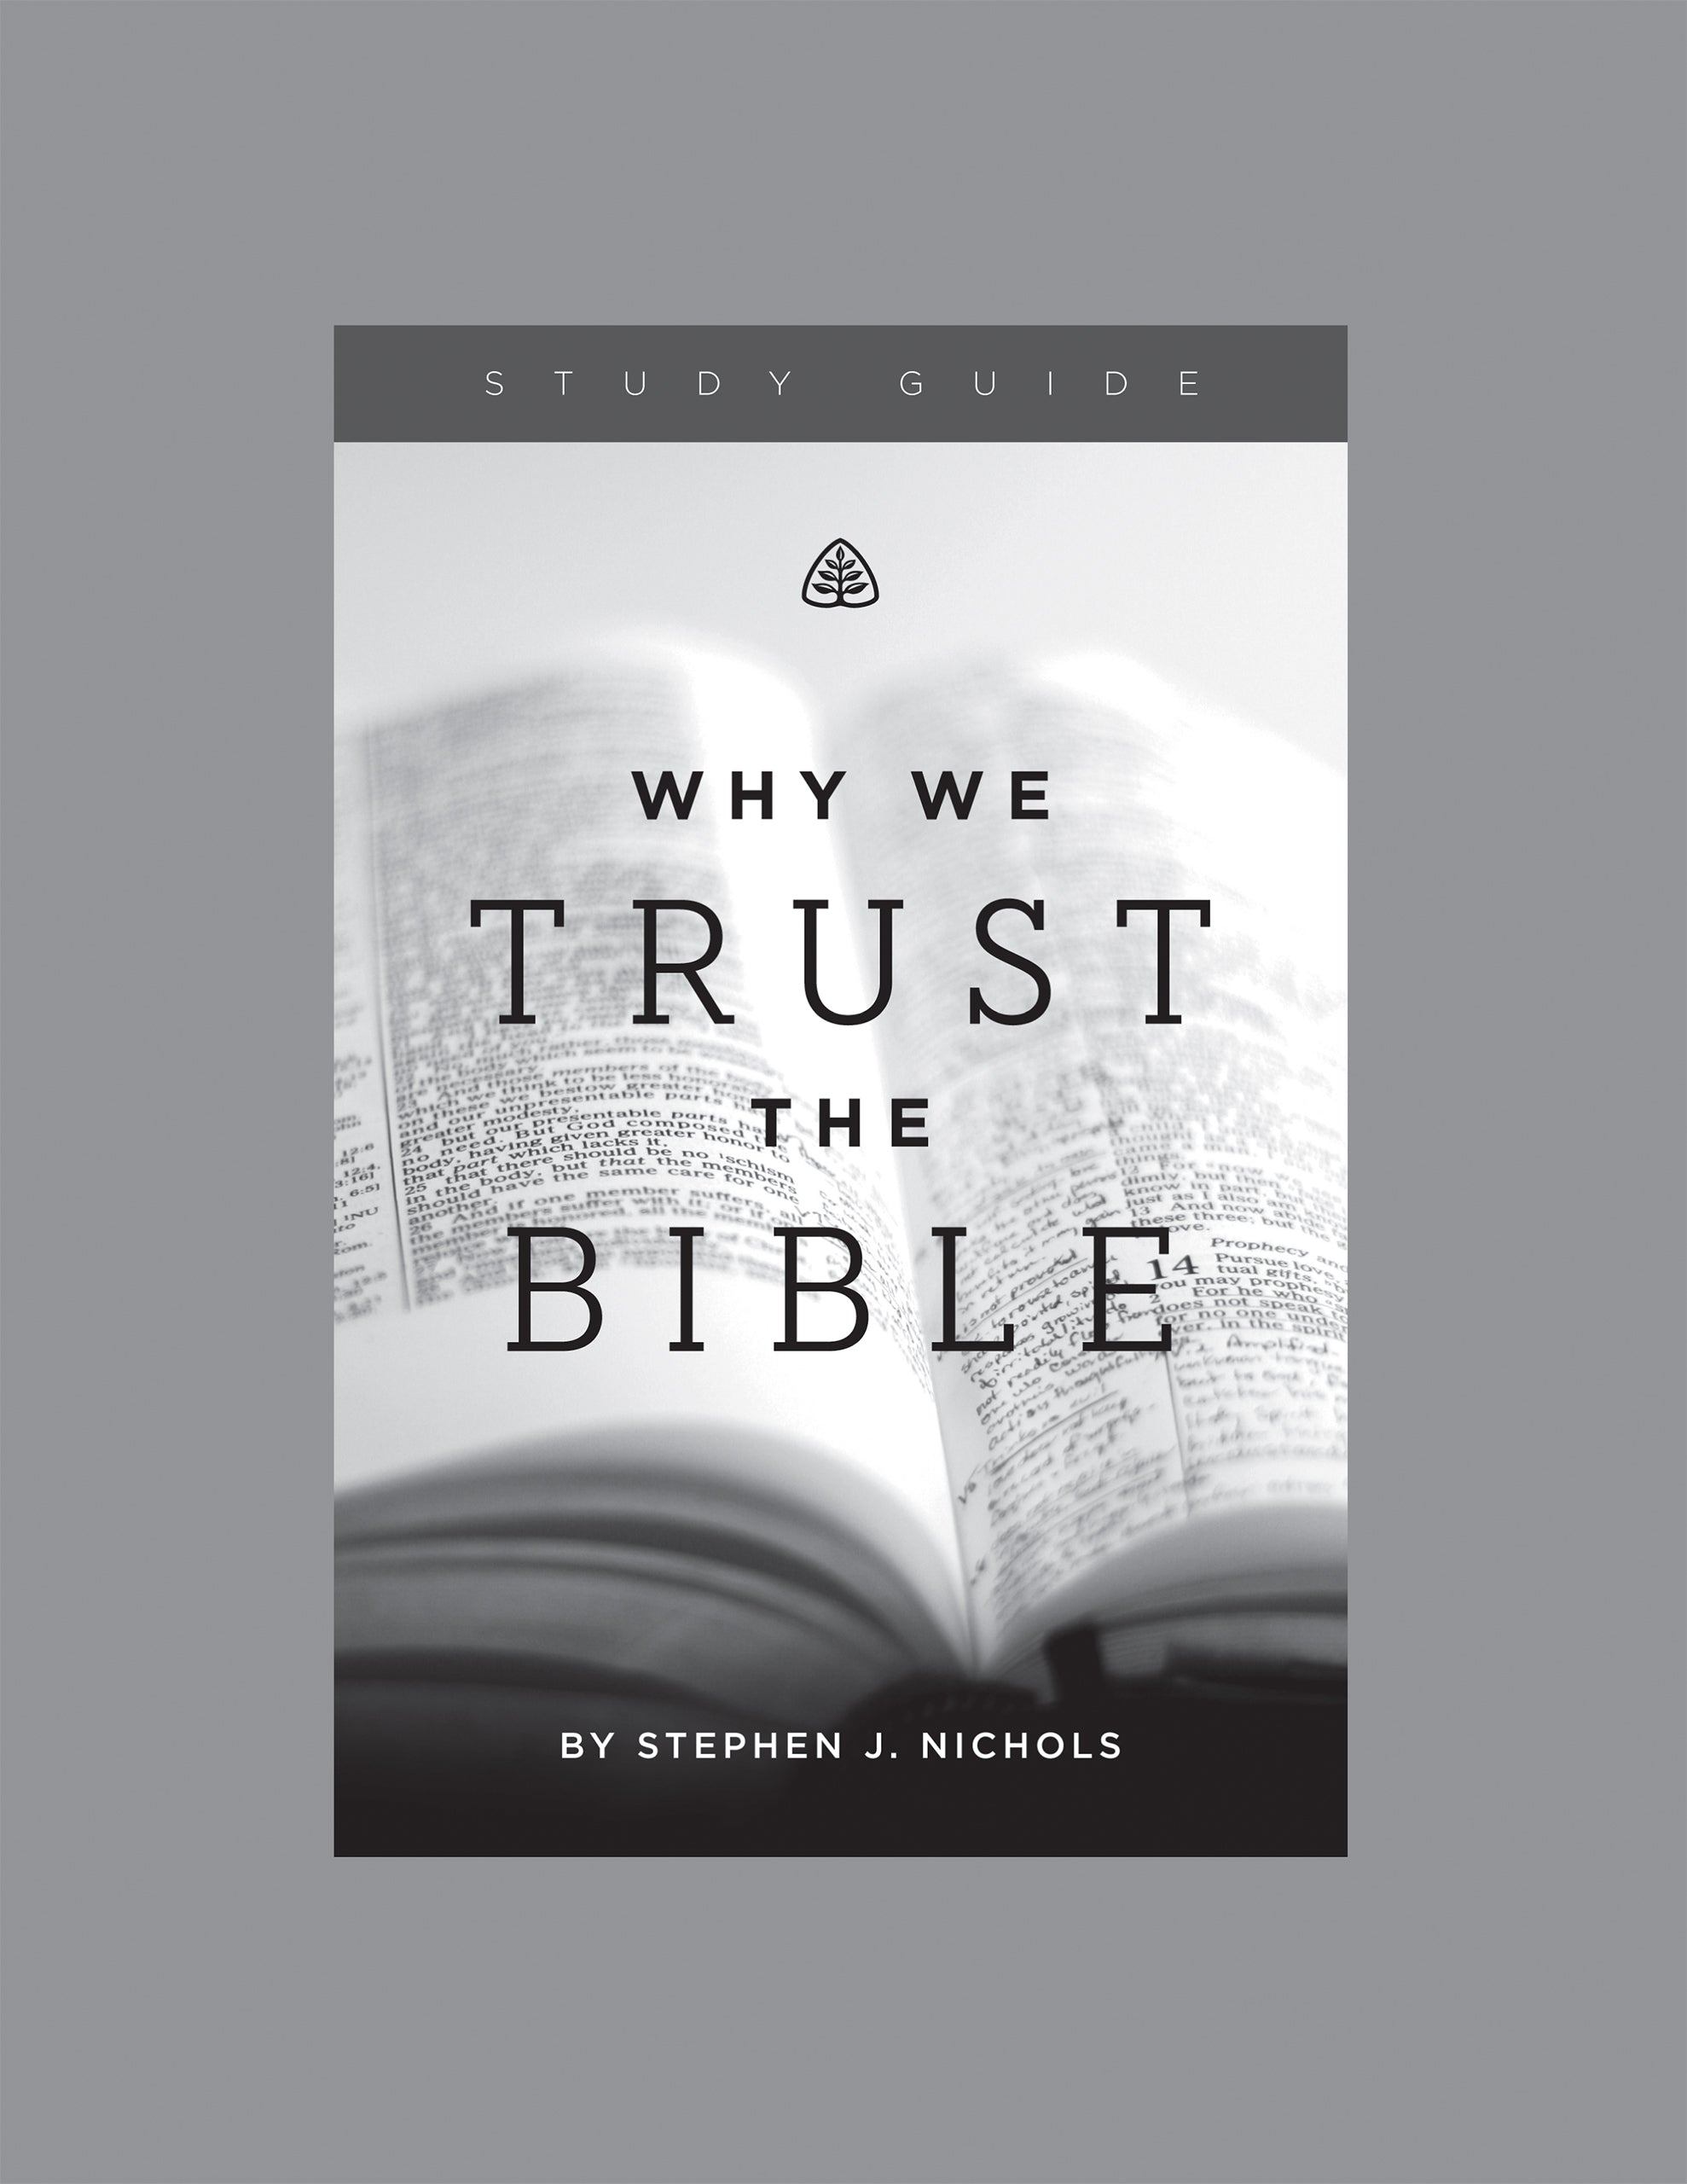 Why We Trust the Bible: Stephen J. Nichols - Study Guide, Teaching ...